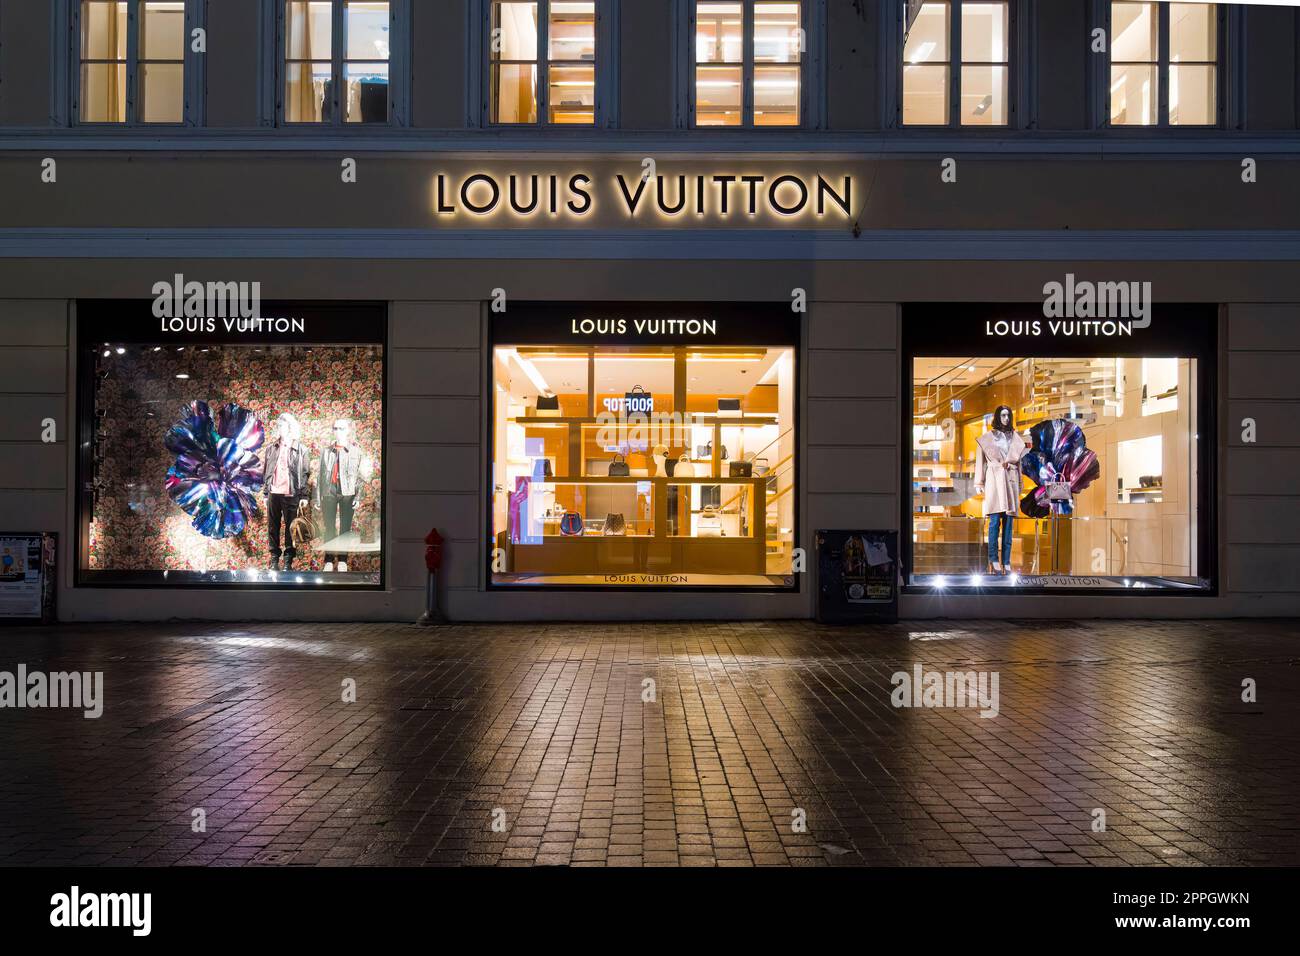 Louis Vuitton brand shop in Copenhagen, Denmark Stock Photo